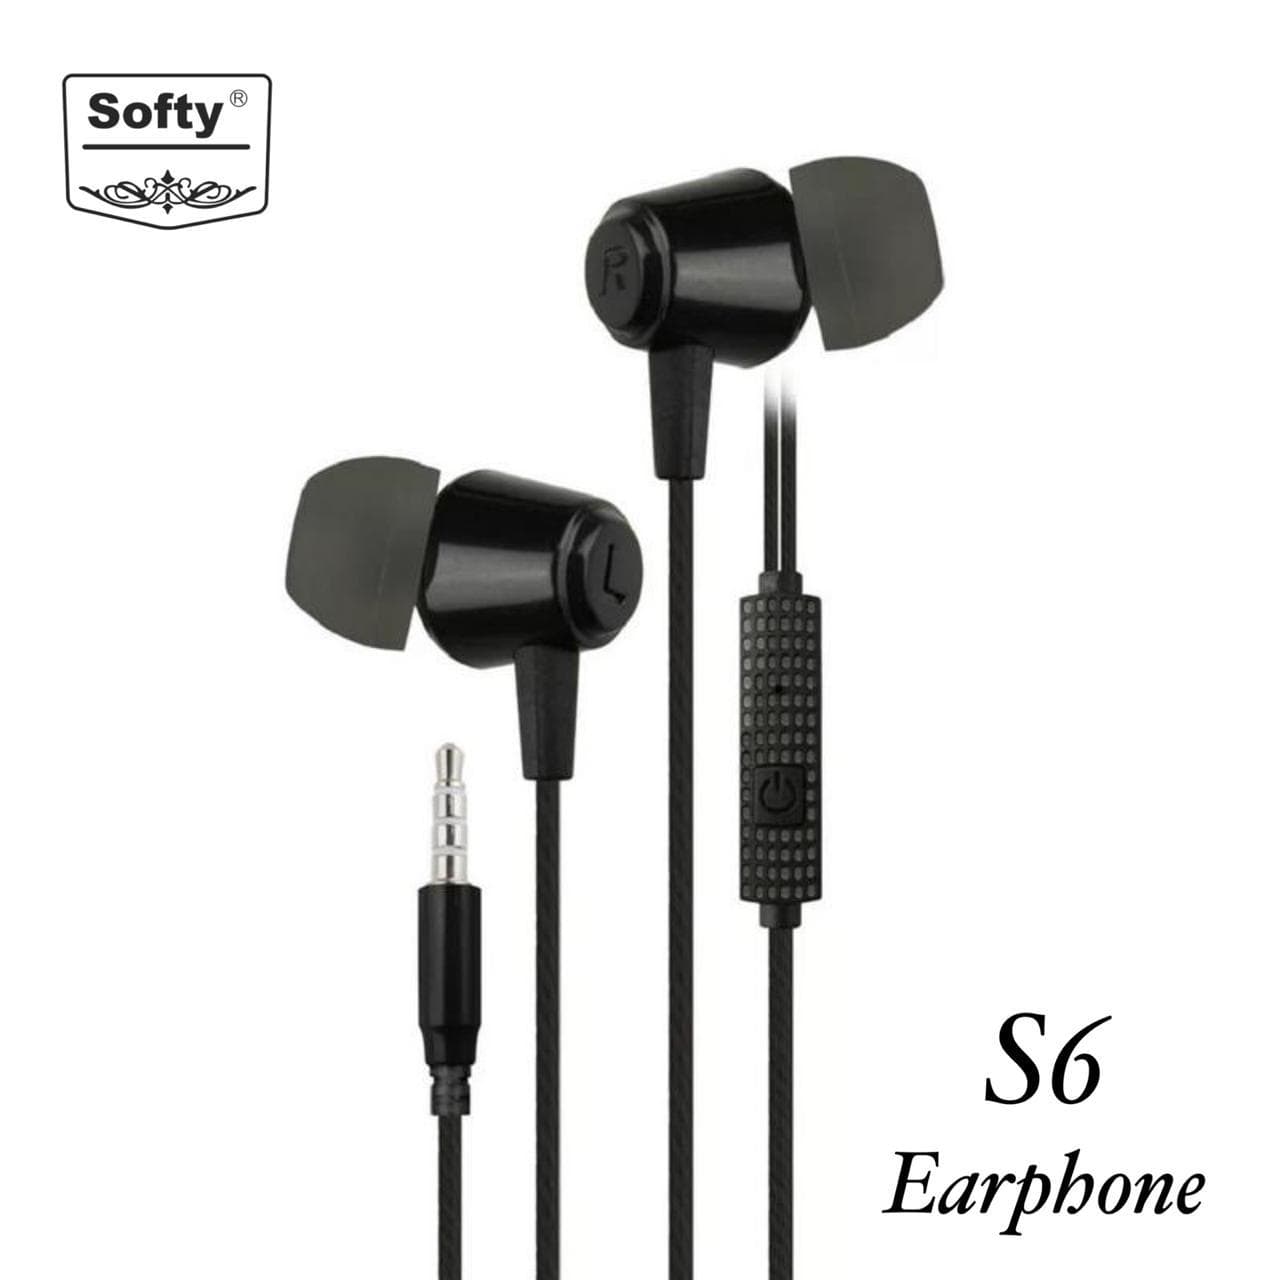 Softy premium quality EARPHONE WITH MIC S6-EARPHONES-dealsplant